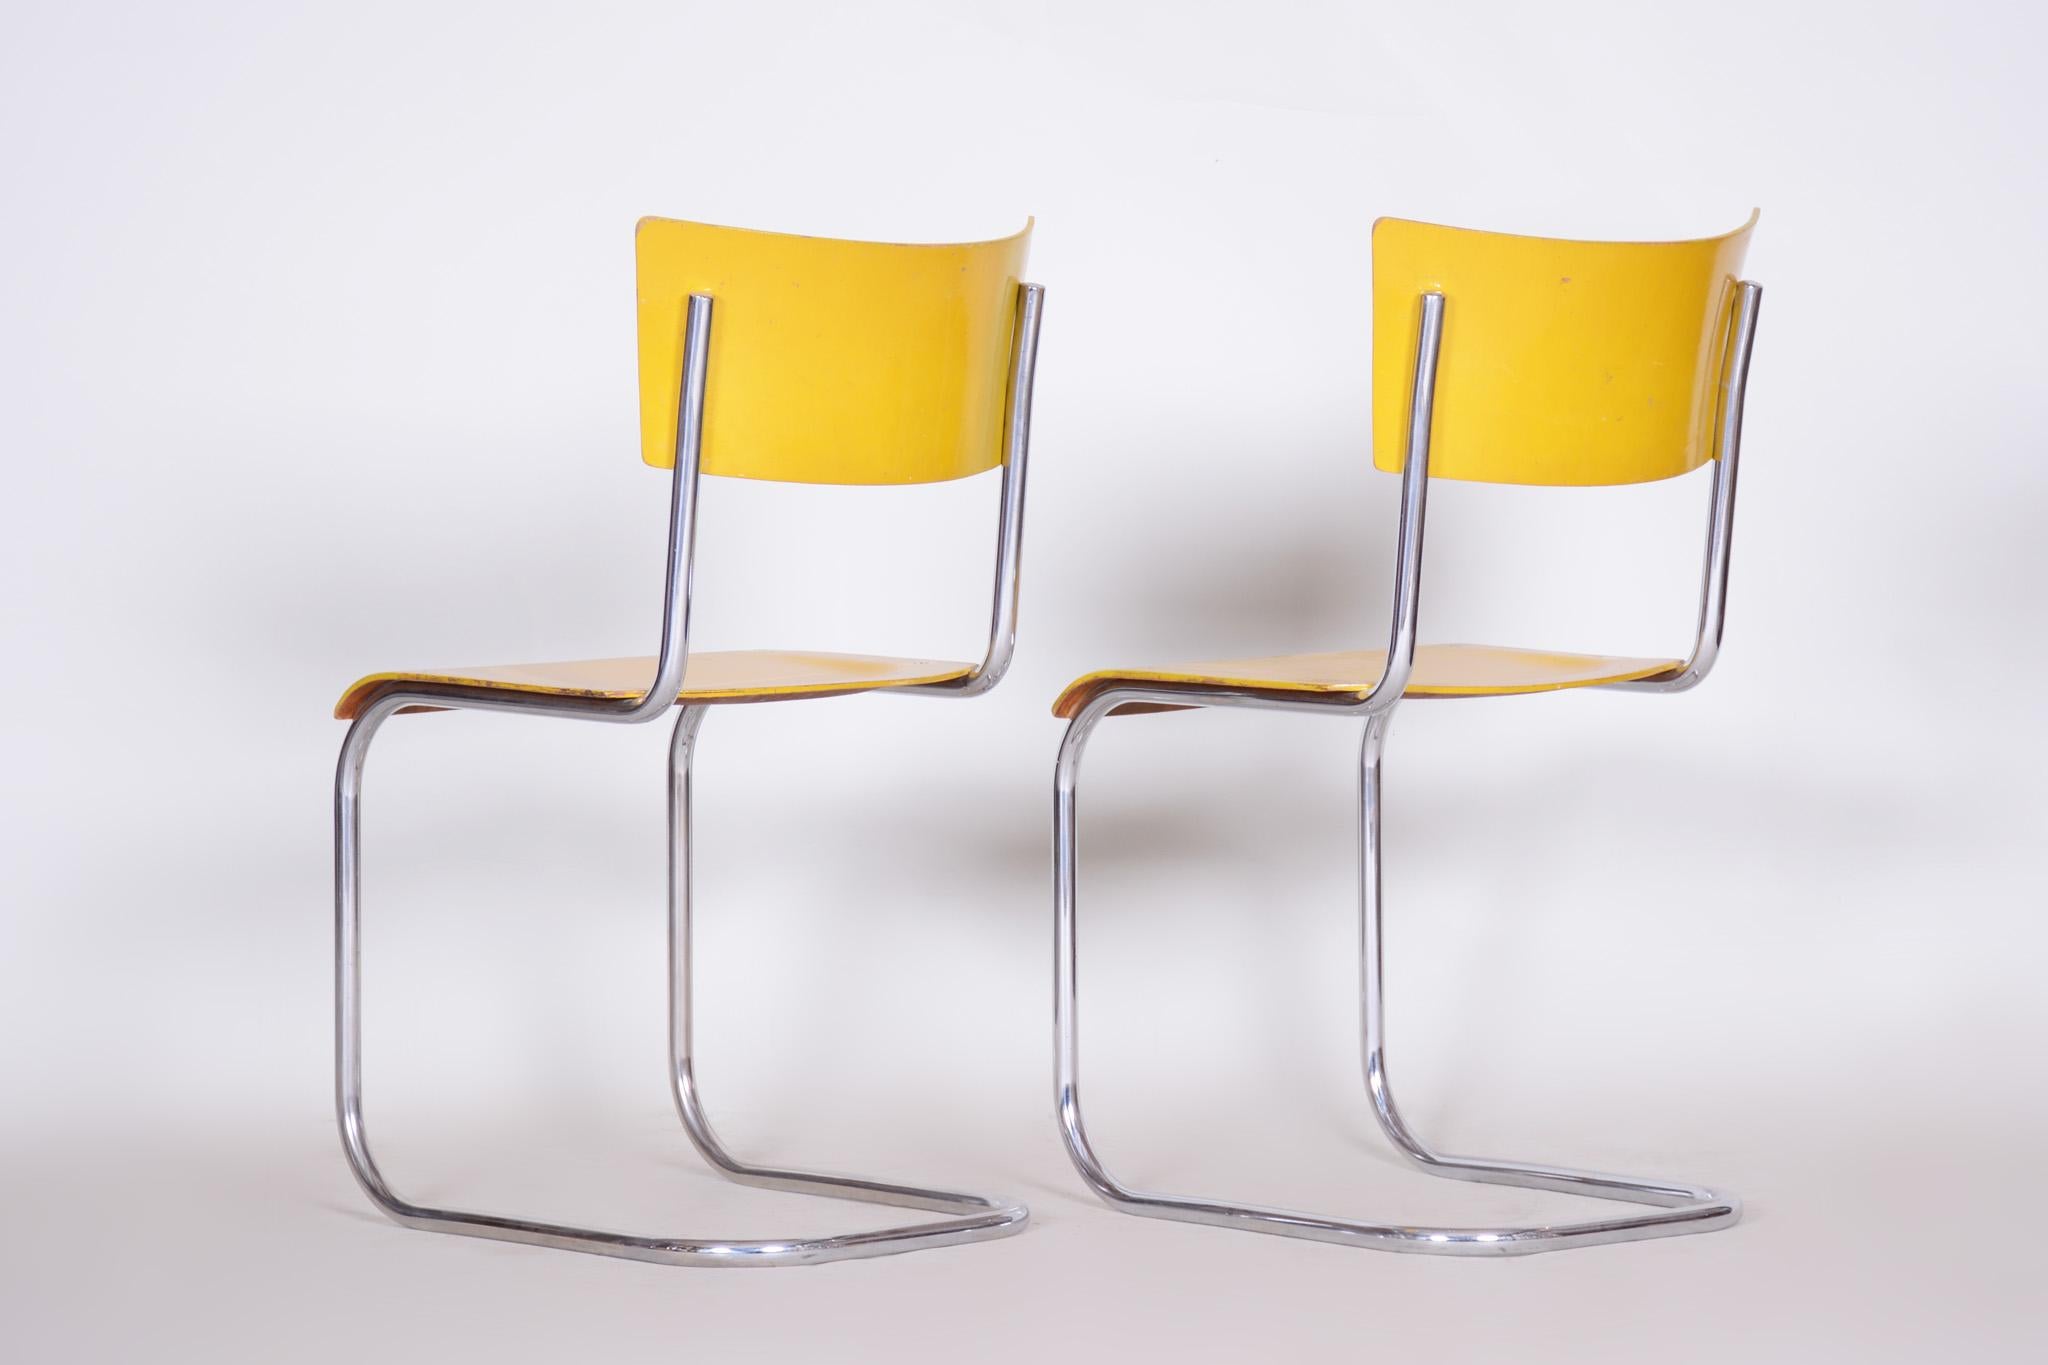 Original Condition Czech Bauhaus Yellow Pair of Chairs by Mart Stam, 1930s 3